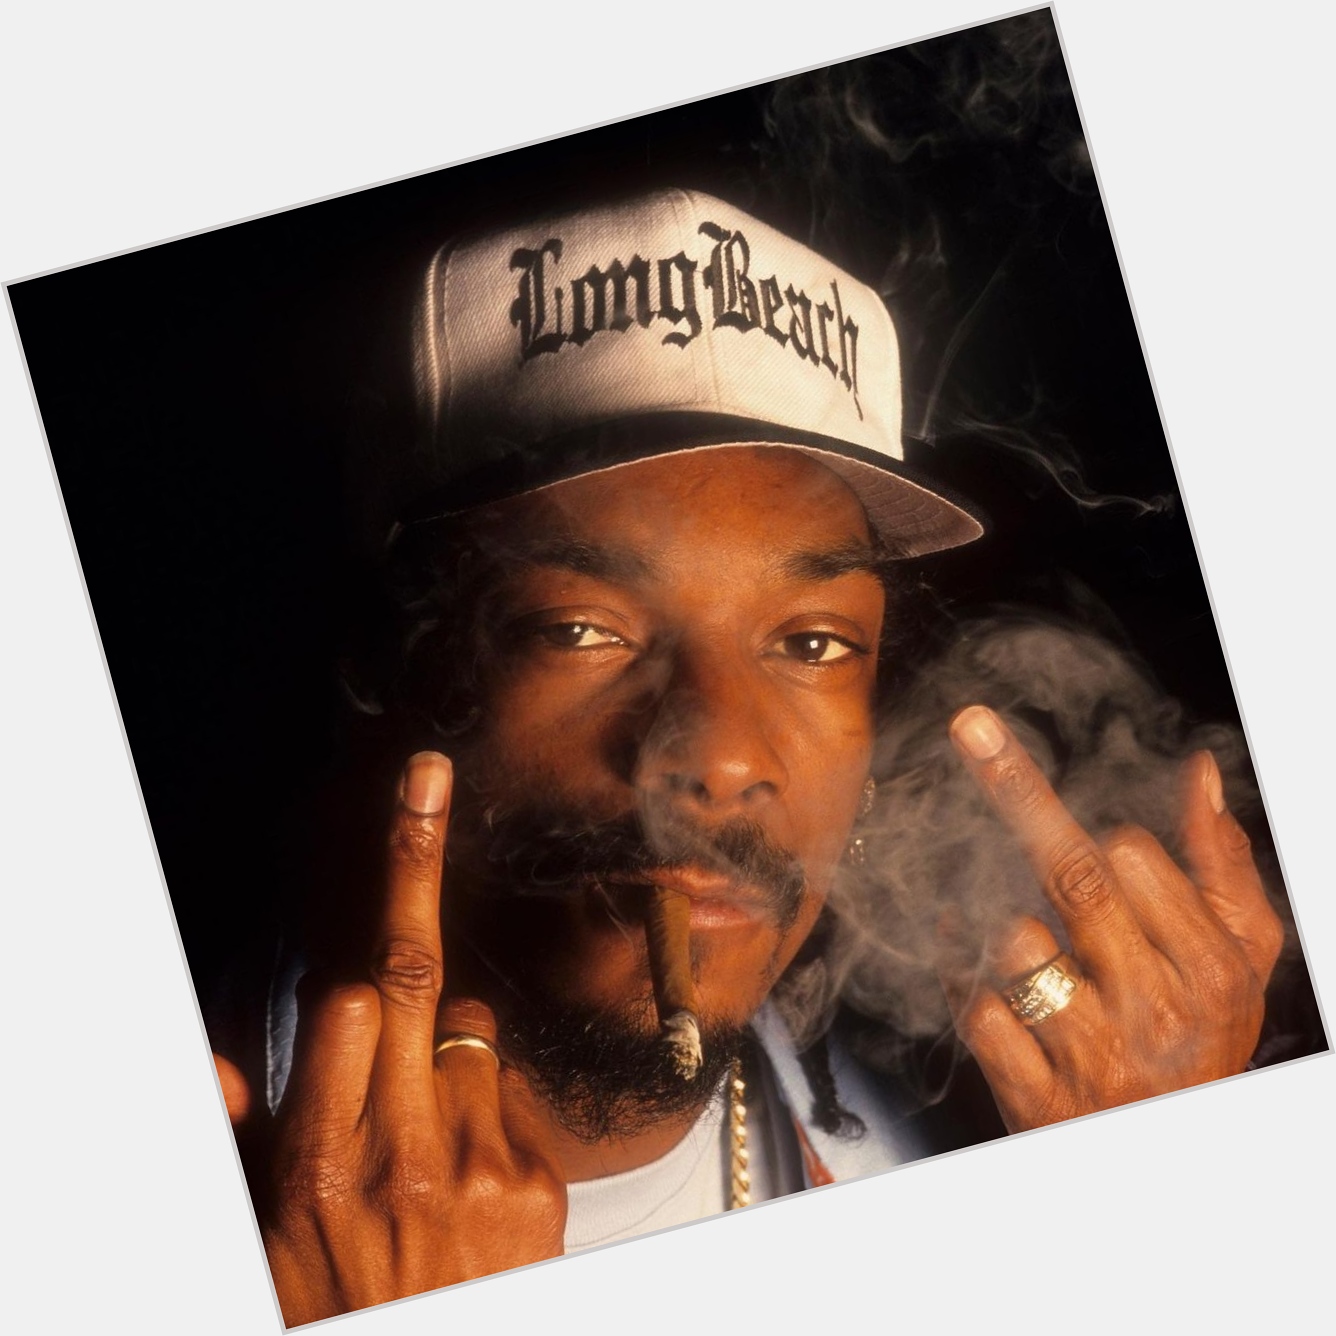 Happy birthday to Snoop Dogg 